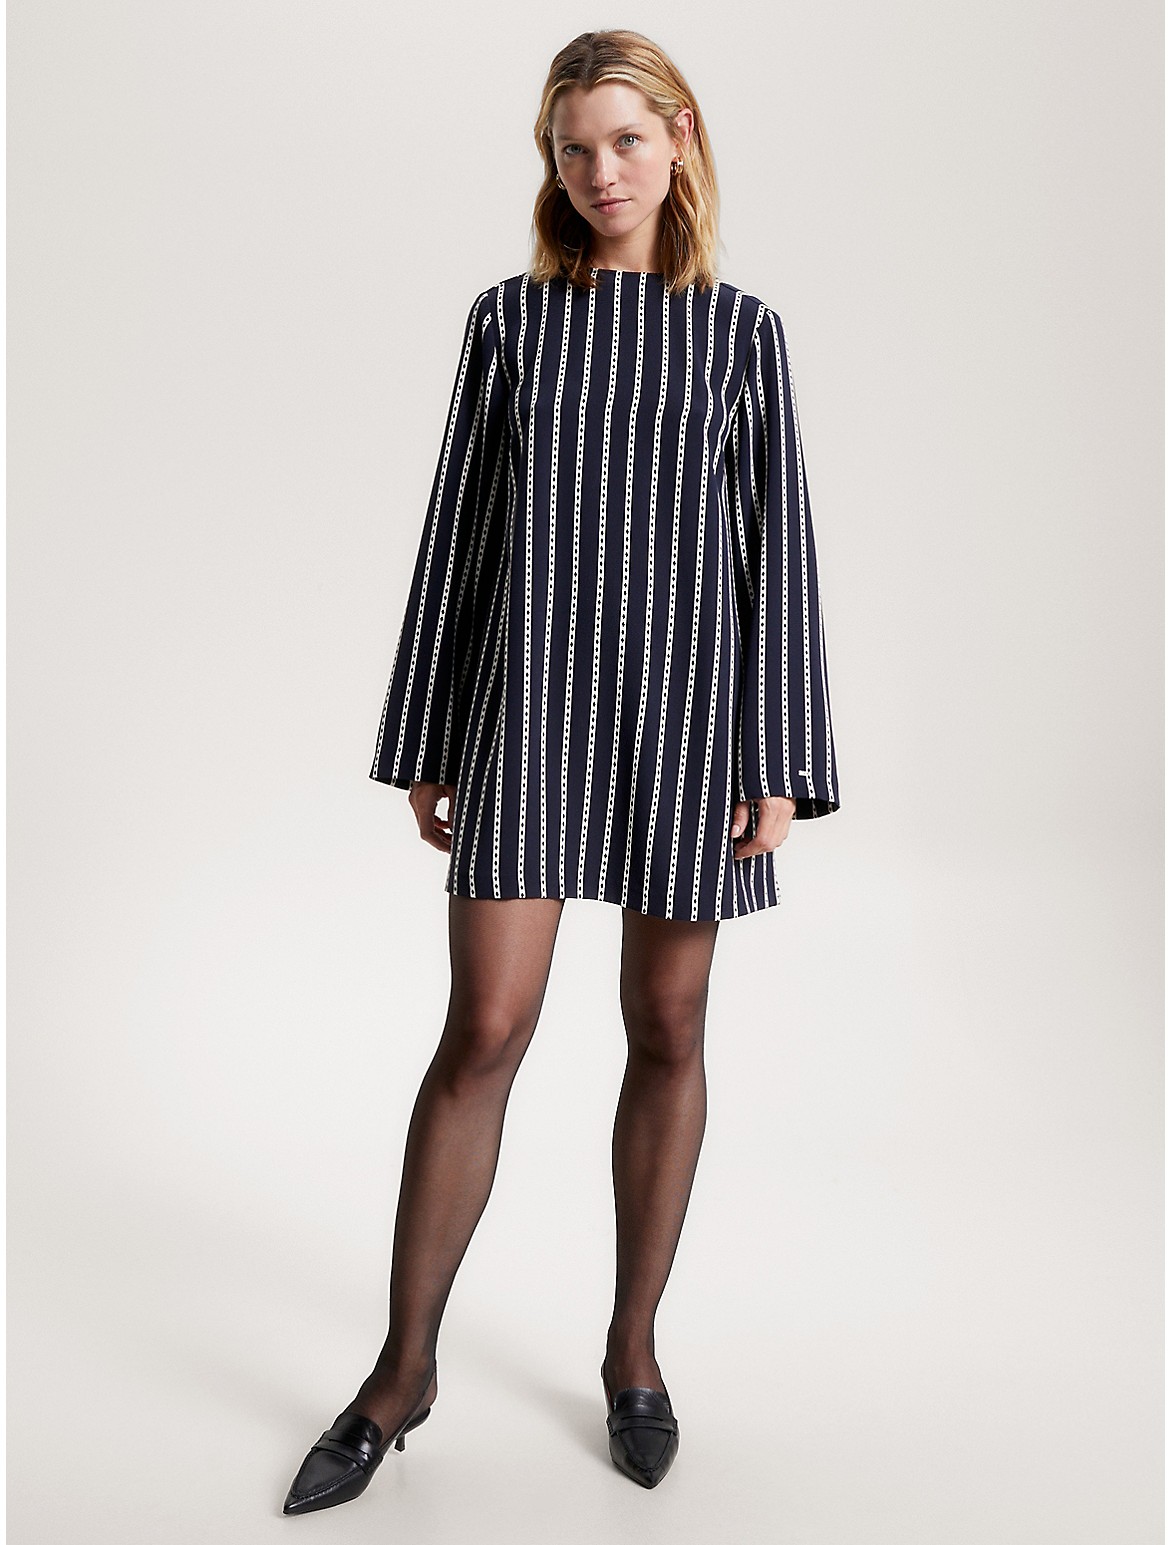 Tommy Hilfiger Women's Argyle Stripe Crepe Mini Dress